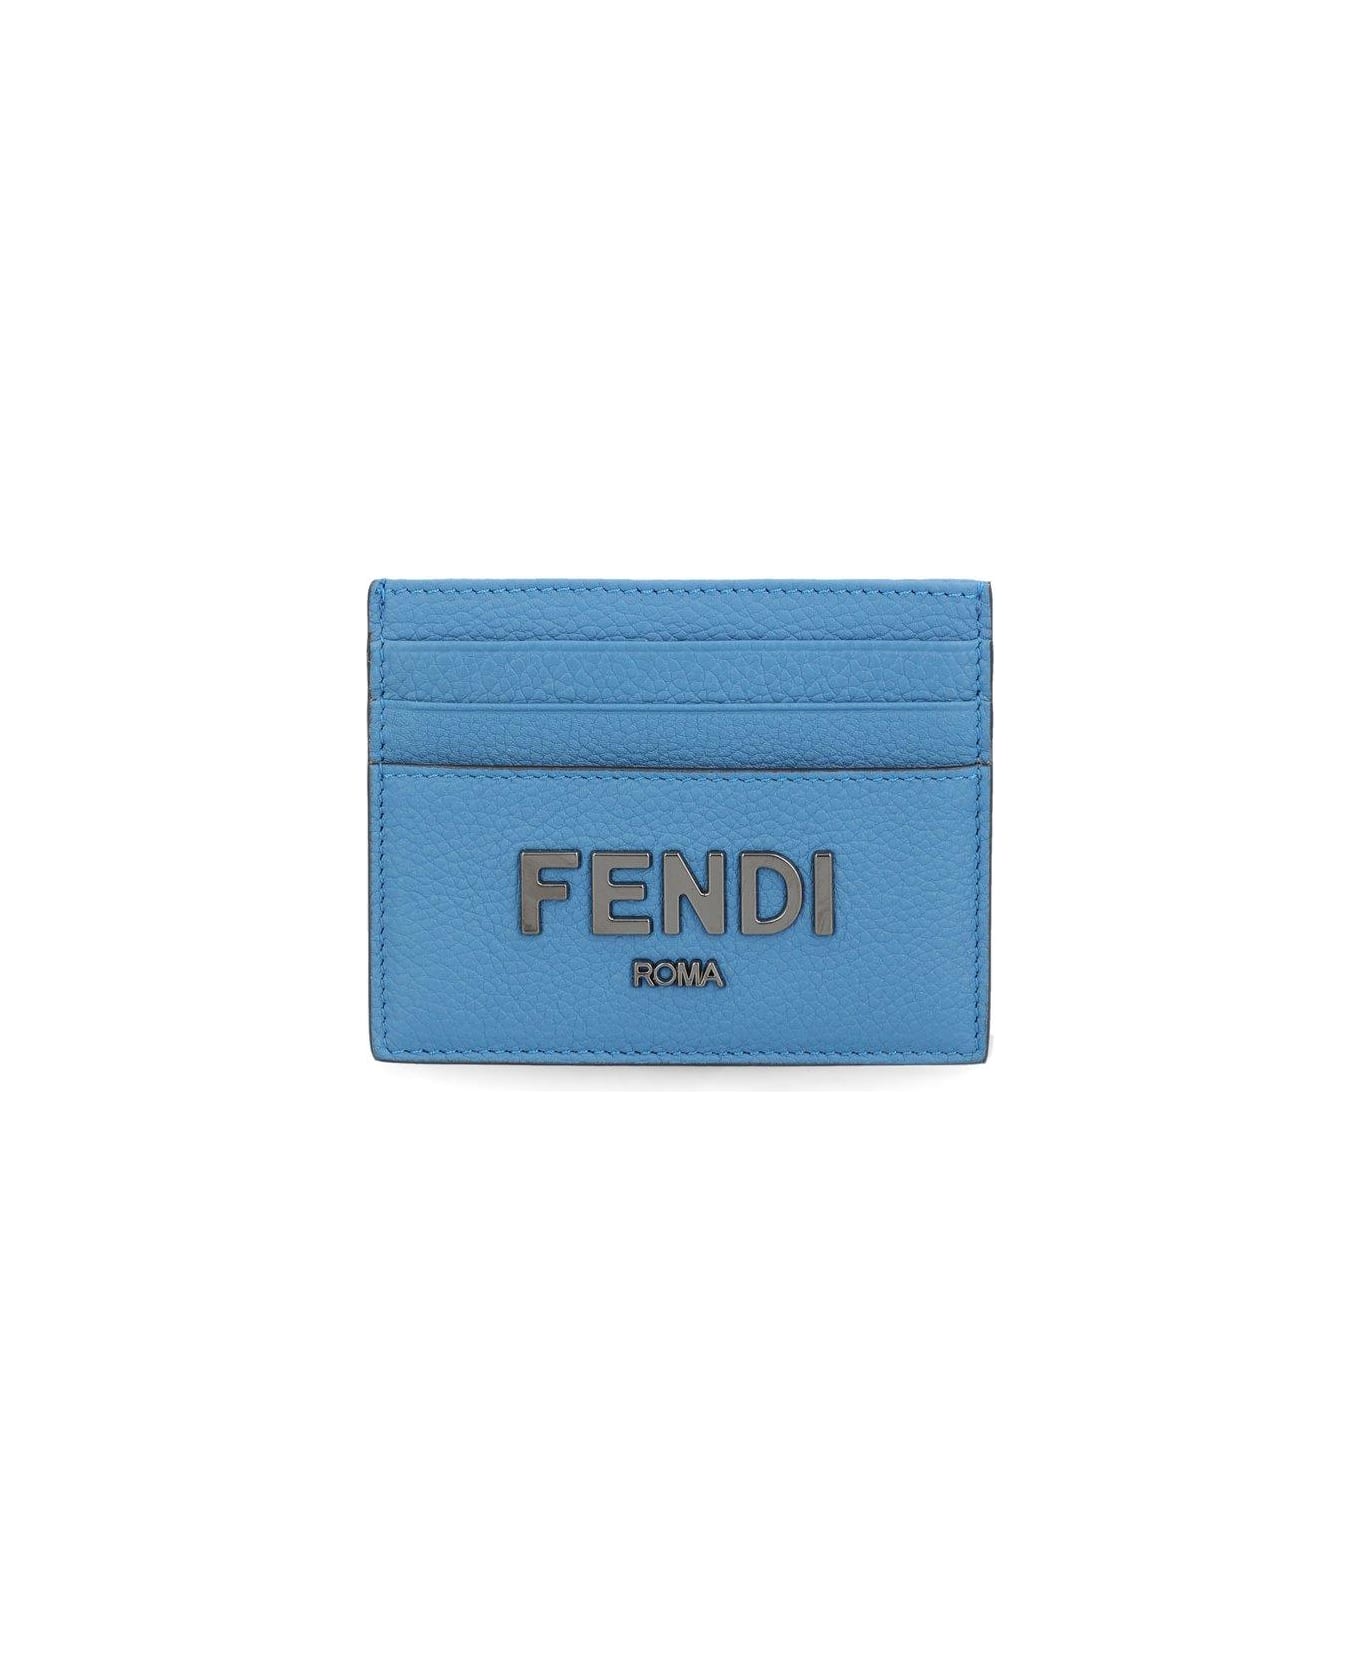 Fendi Signature Card Holder - Light blue